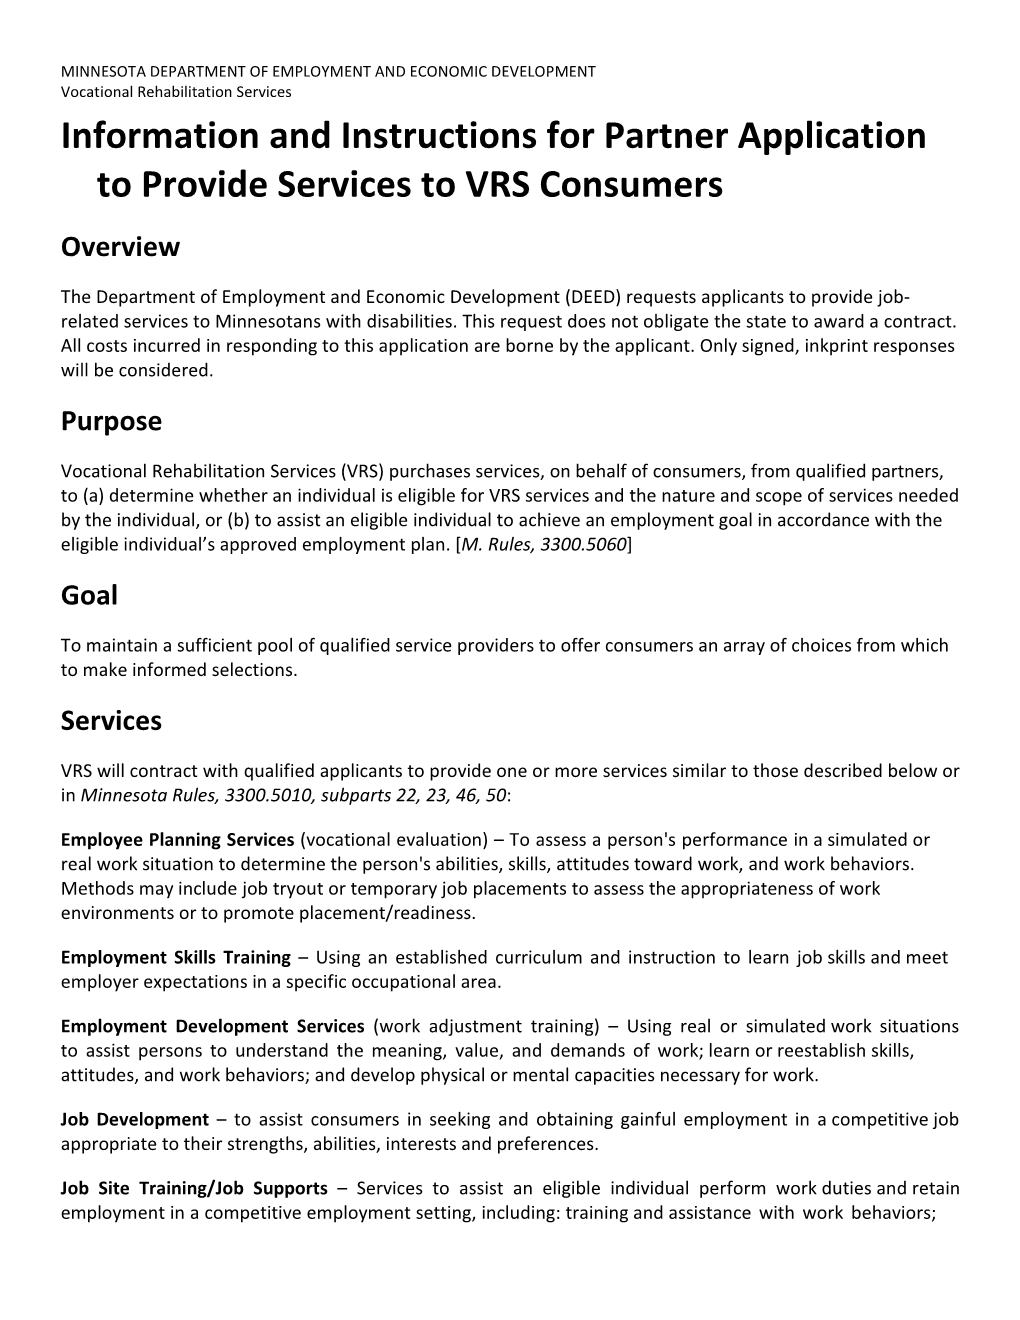 VRS Partner Soliciation Instructions